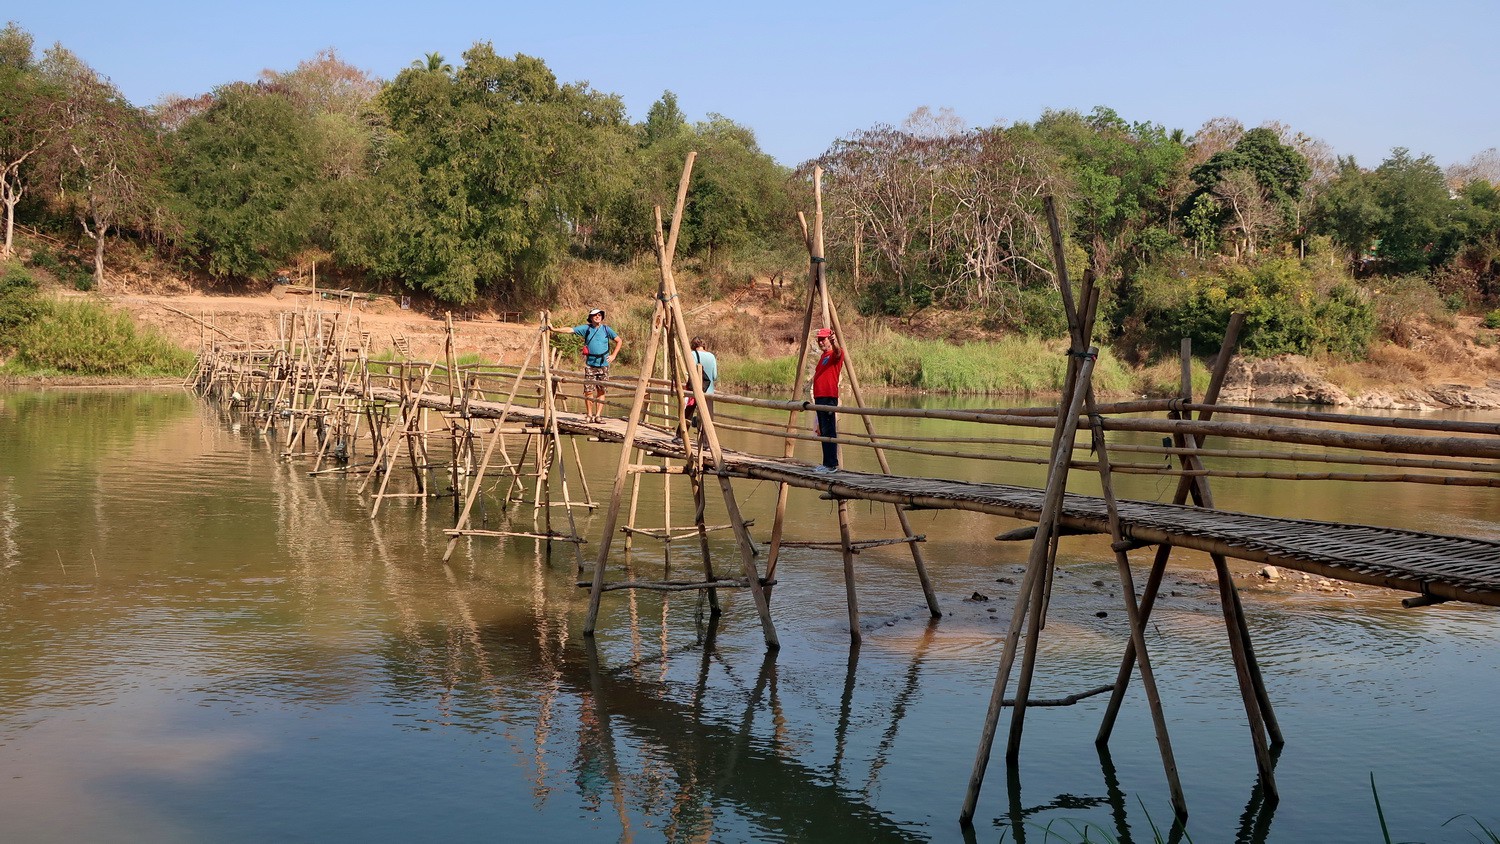 Crossing the northern bamboo bridge over Nam Khan river